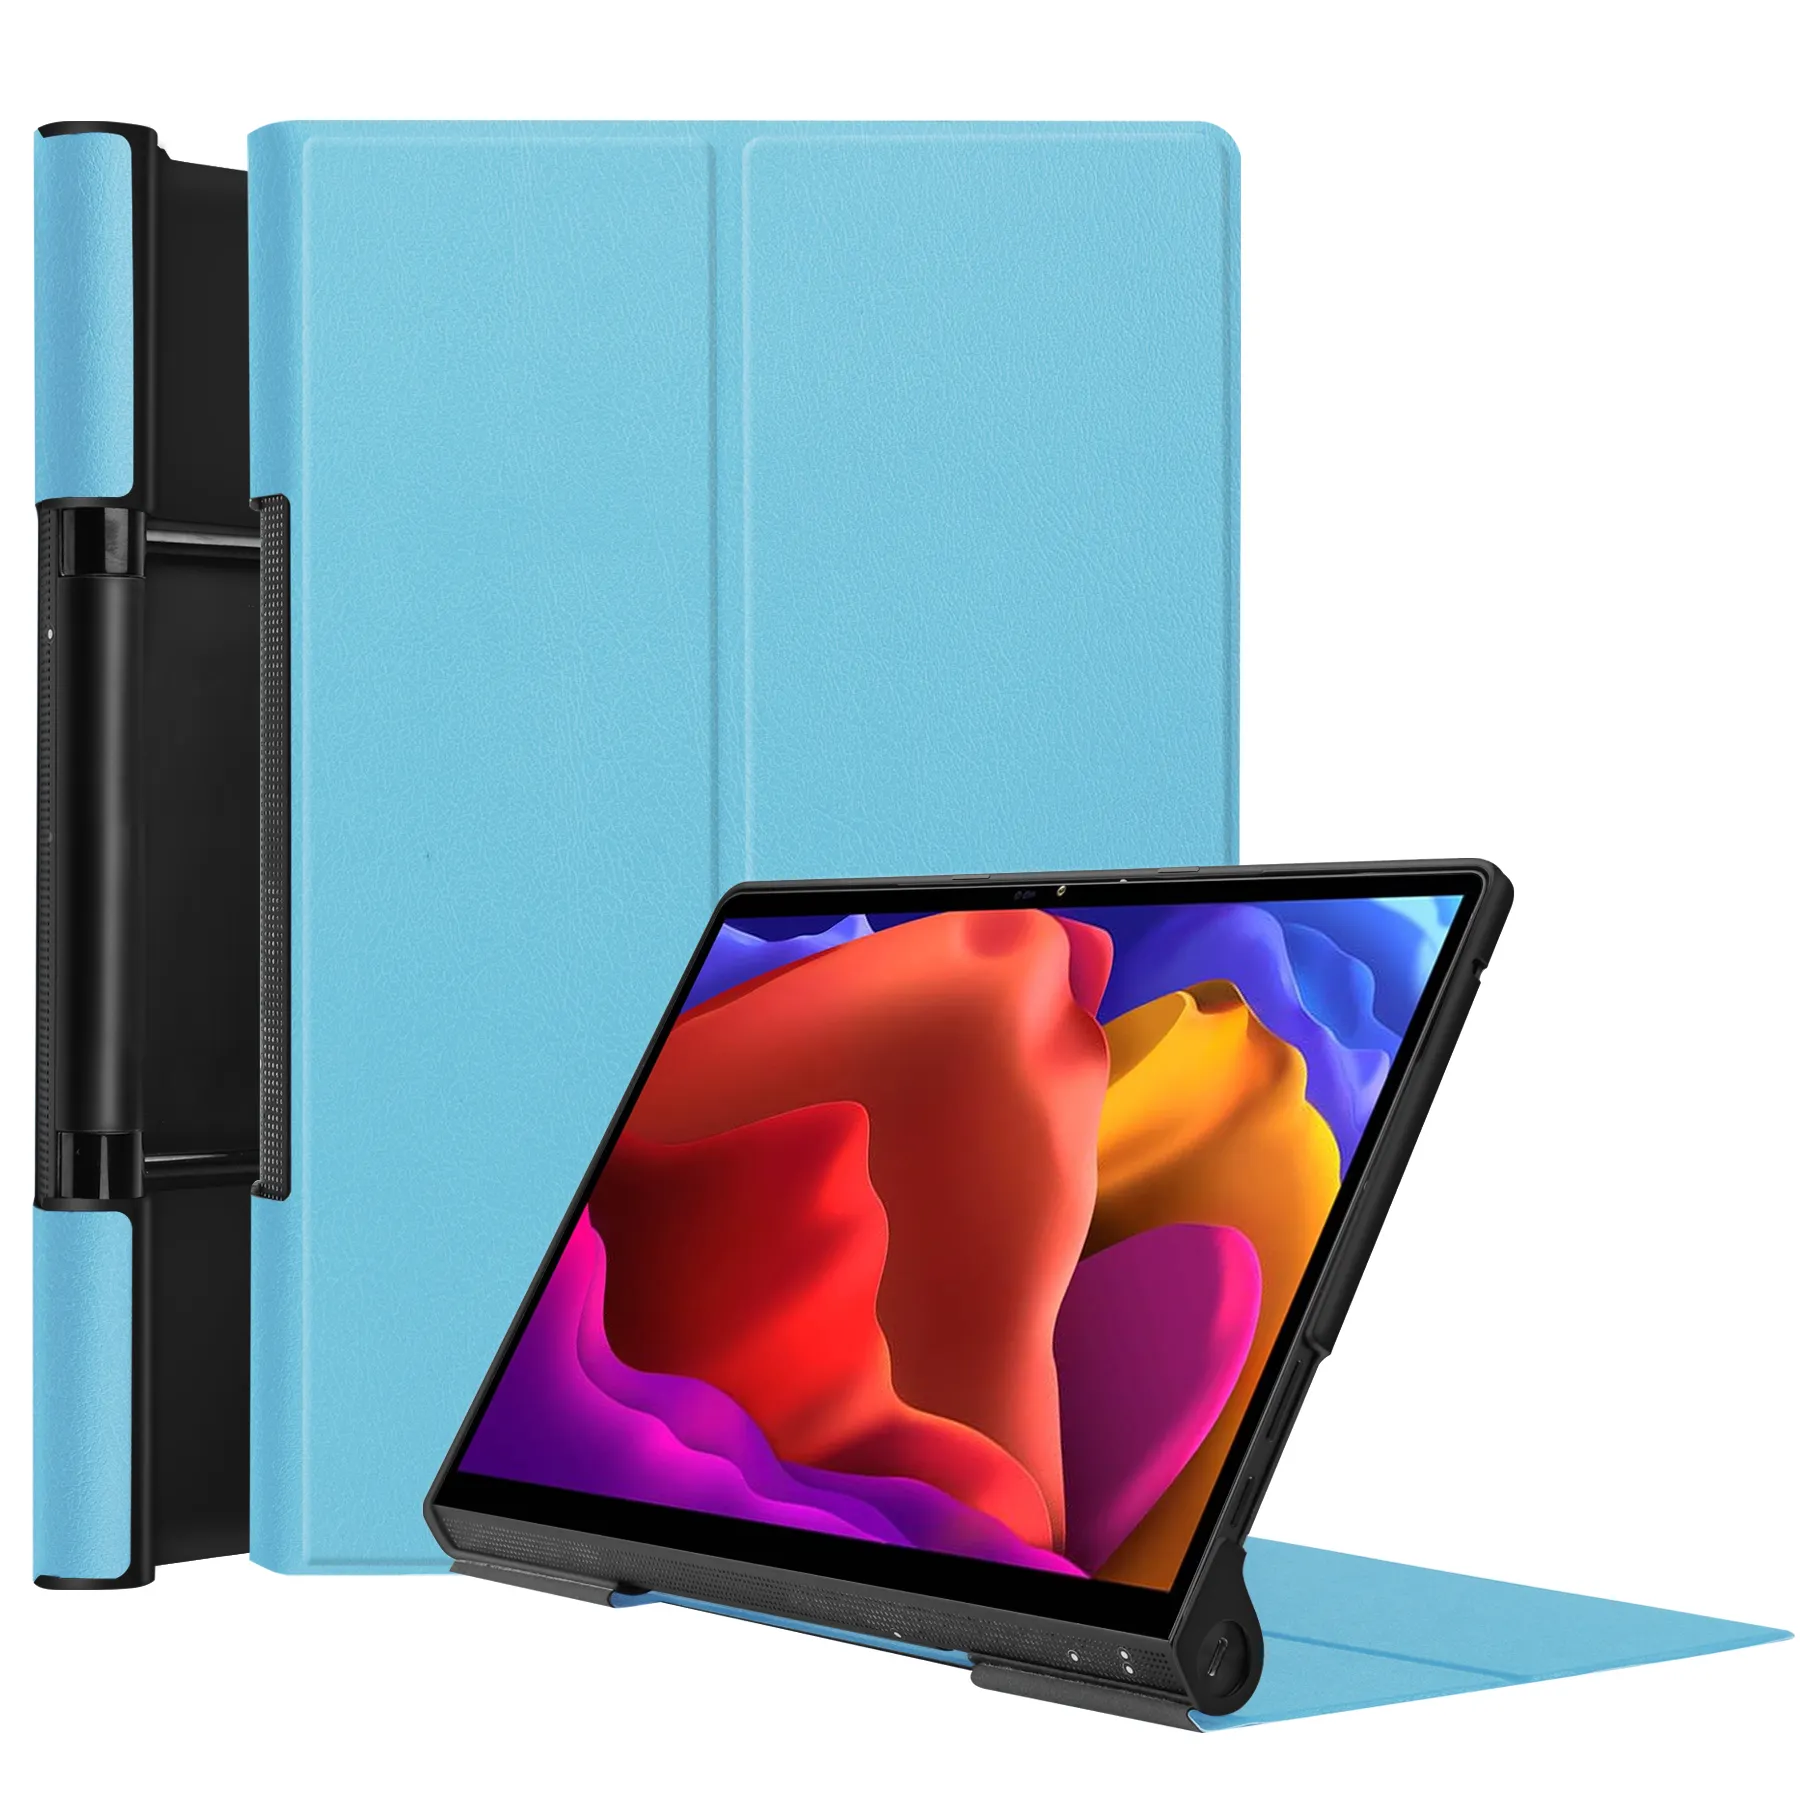 CYKE Casing Tablet untuk Lenovo Yoga Pad Pro 13 Inci, Produk Baru Penutup Tablet Lipat Tiga YT K606F